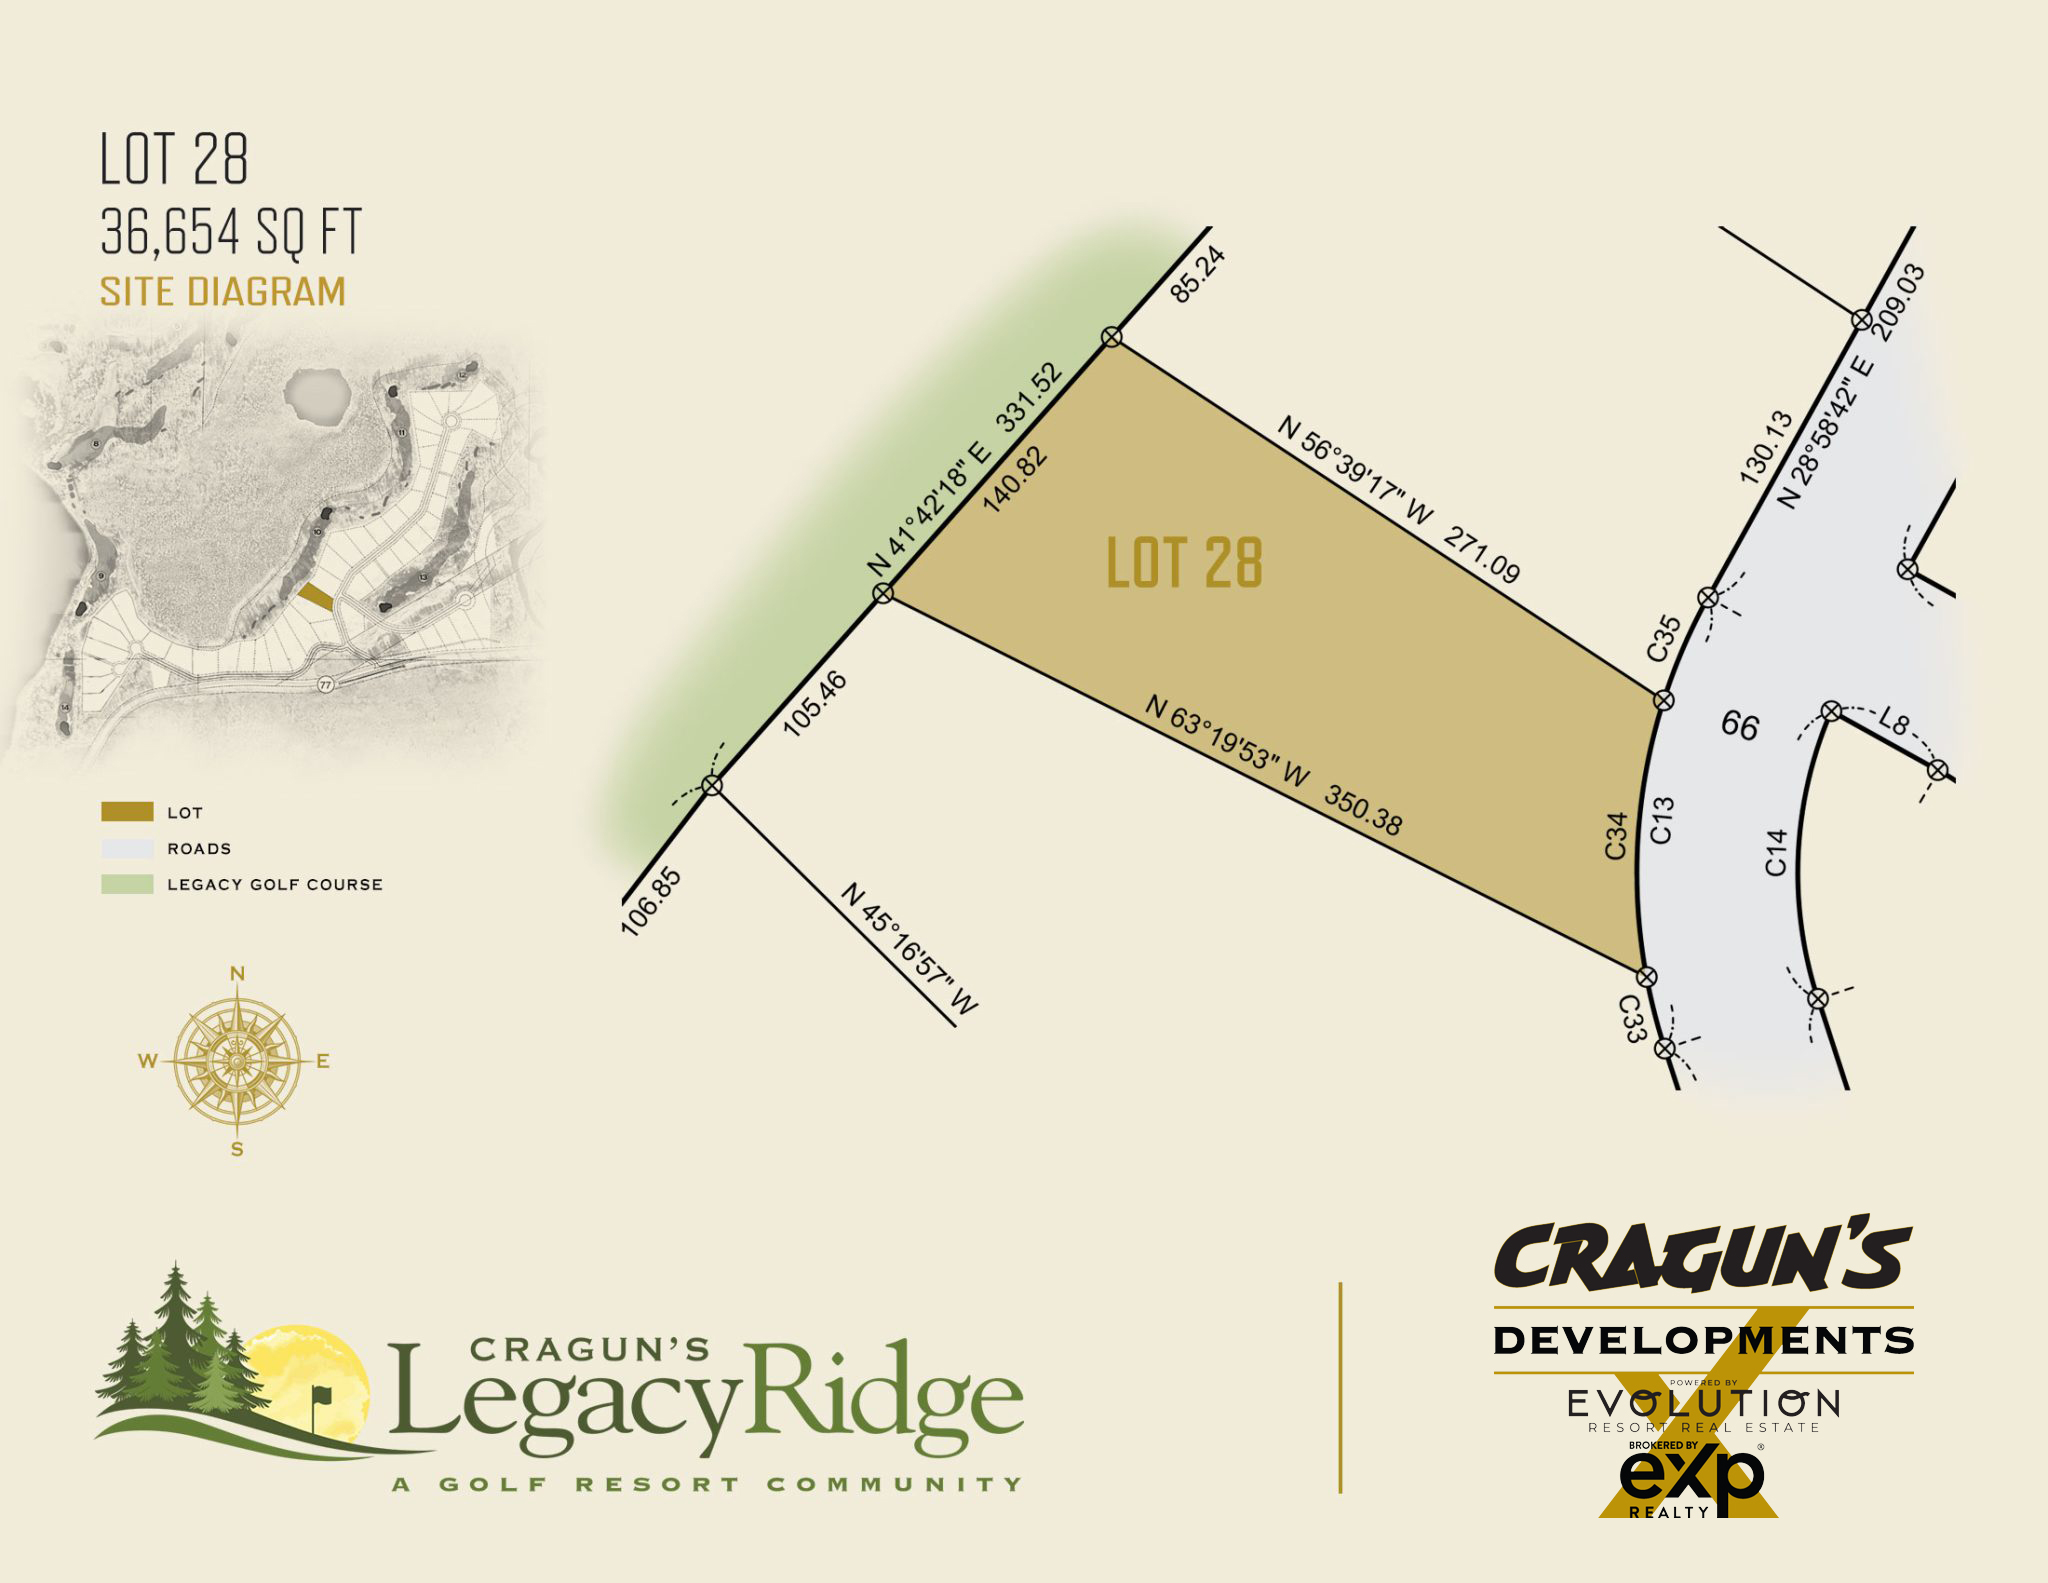 Legacy Ridge Lot 28 at Cragun's Developments in Brainerd, MN